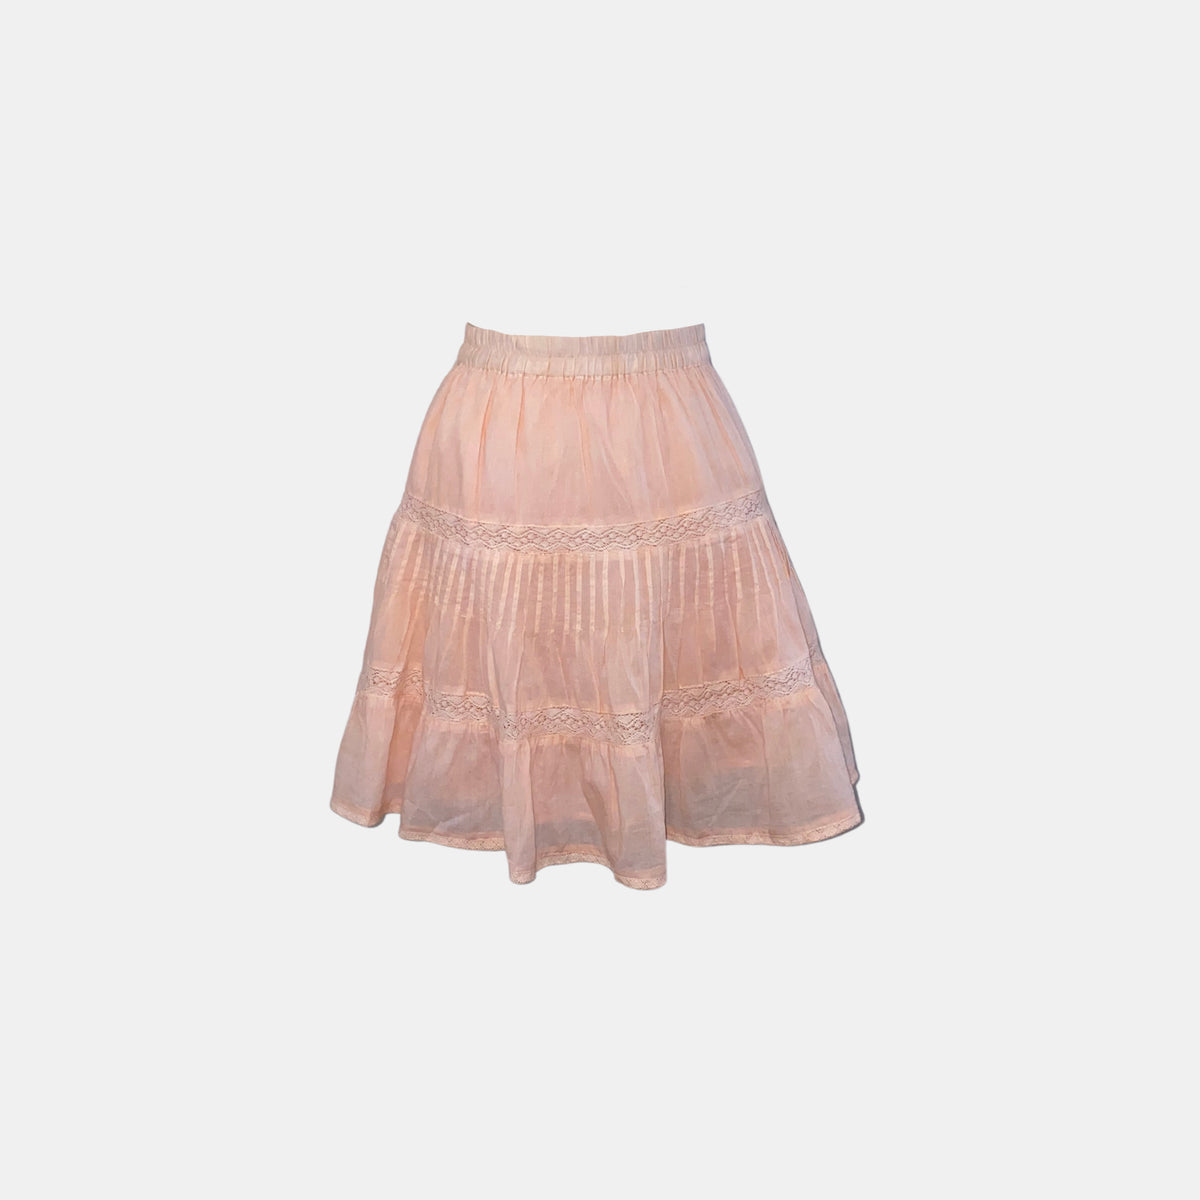 Allison New York Emmie High Waisted Mini Skirt in Blush